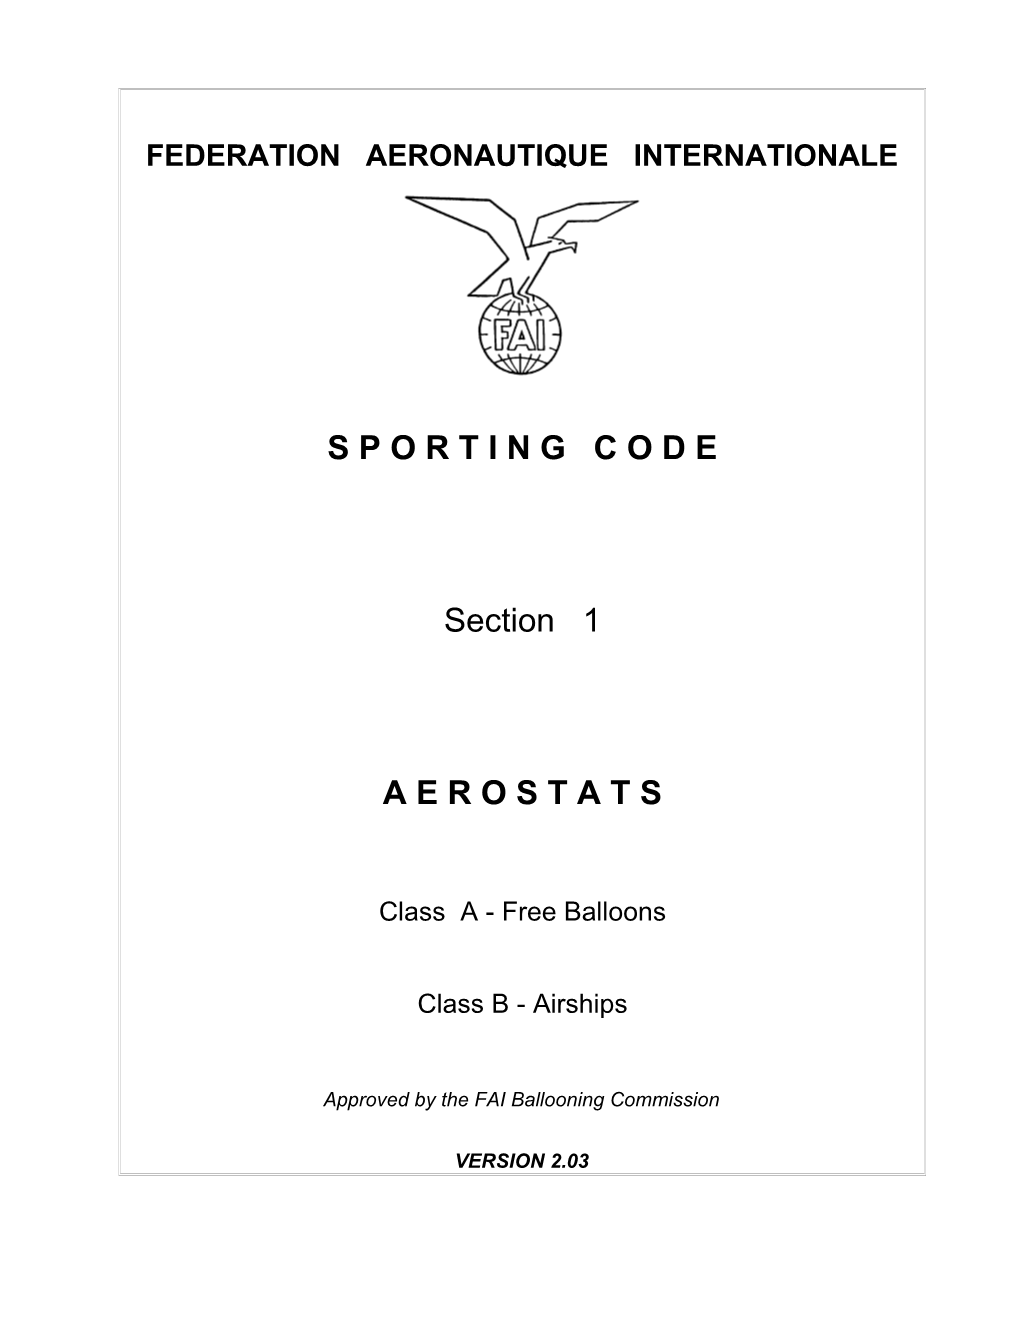 Federation Aeronautique Internationale s1